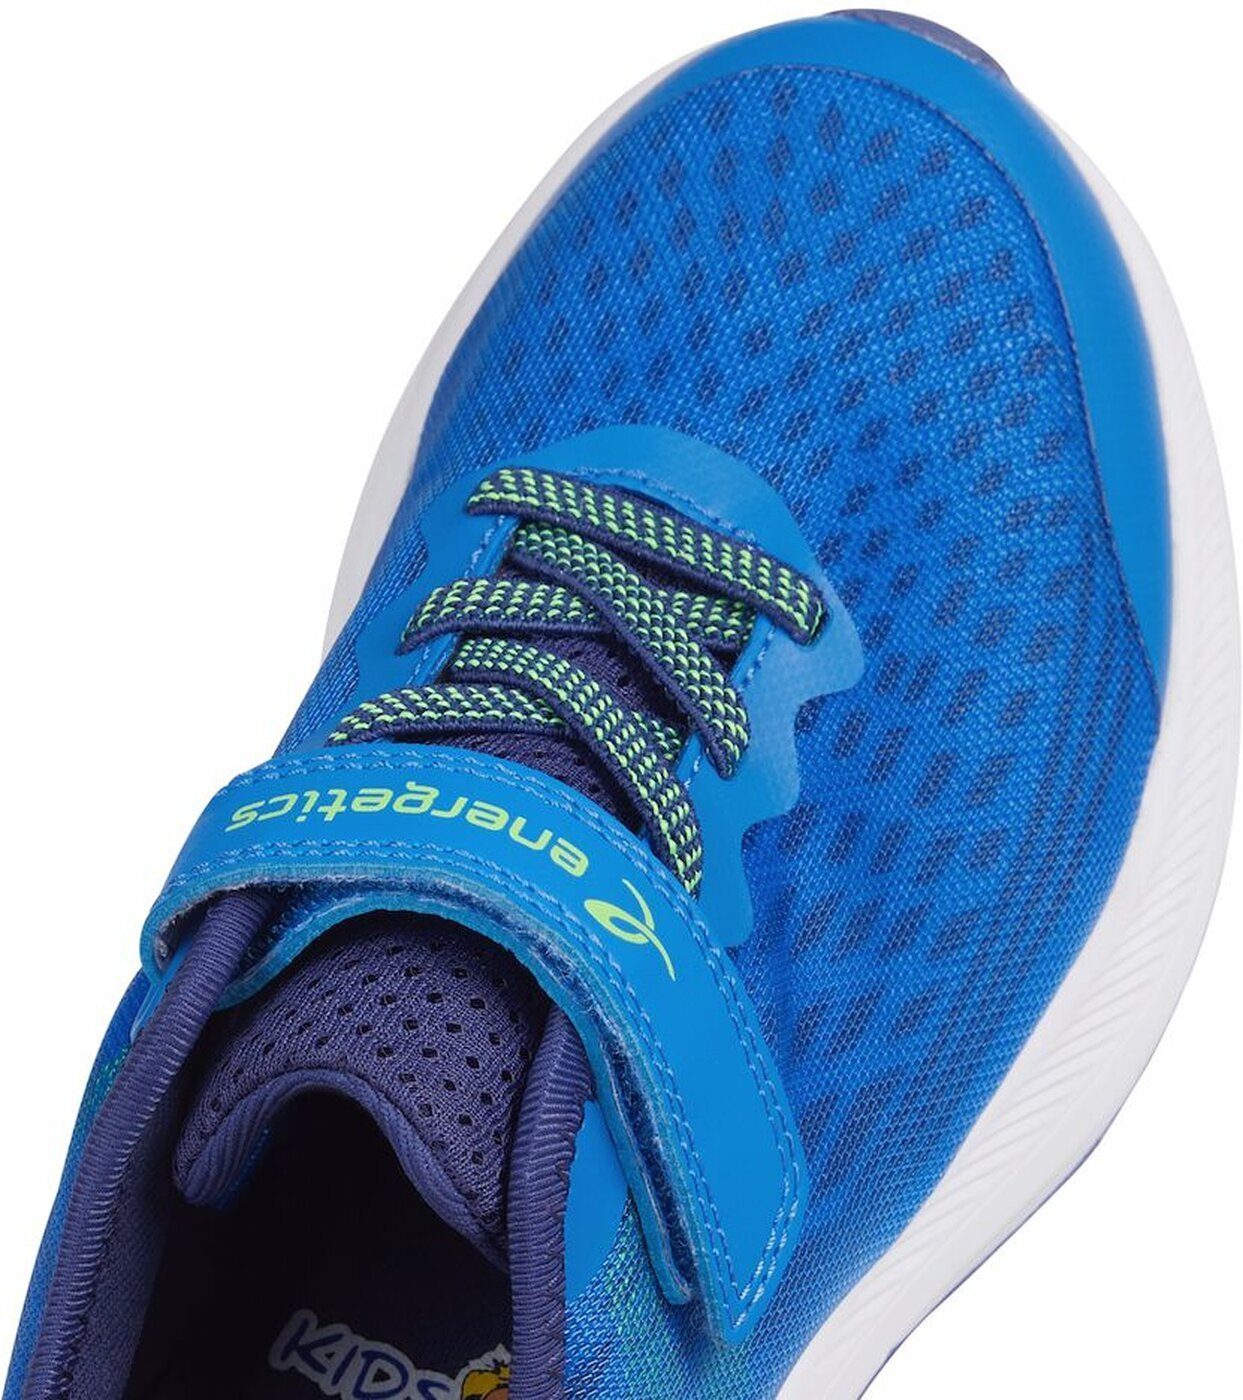 Energetics Ki.-Running-Schuh V/L J OZ ROYAL/BLUE BLUE Laufschuh 2.4 DARK